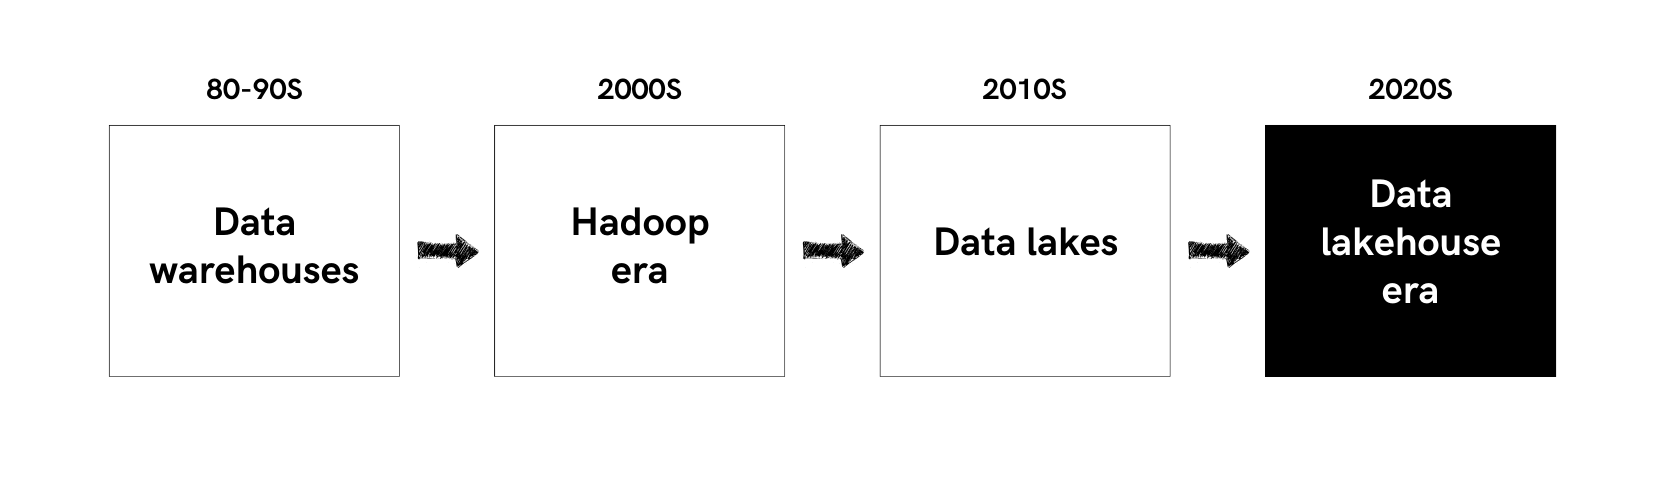 History of Data Lakehouse - Data Lakehouse